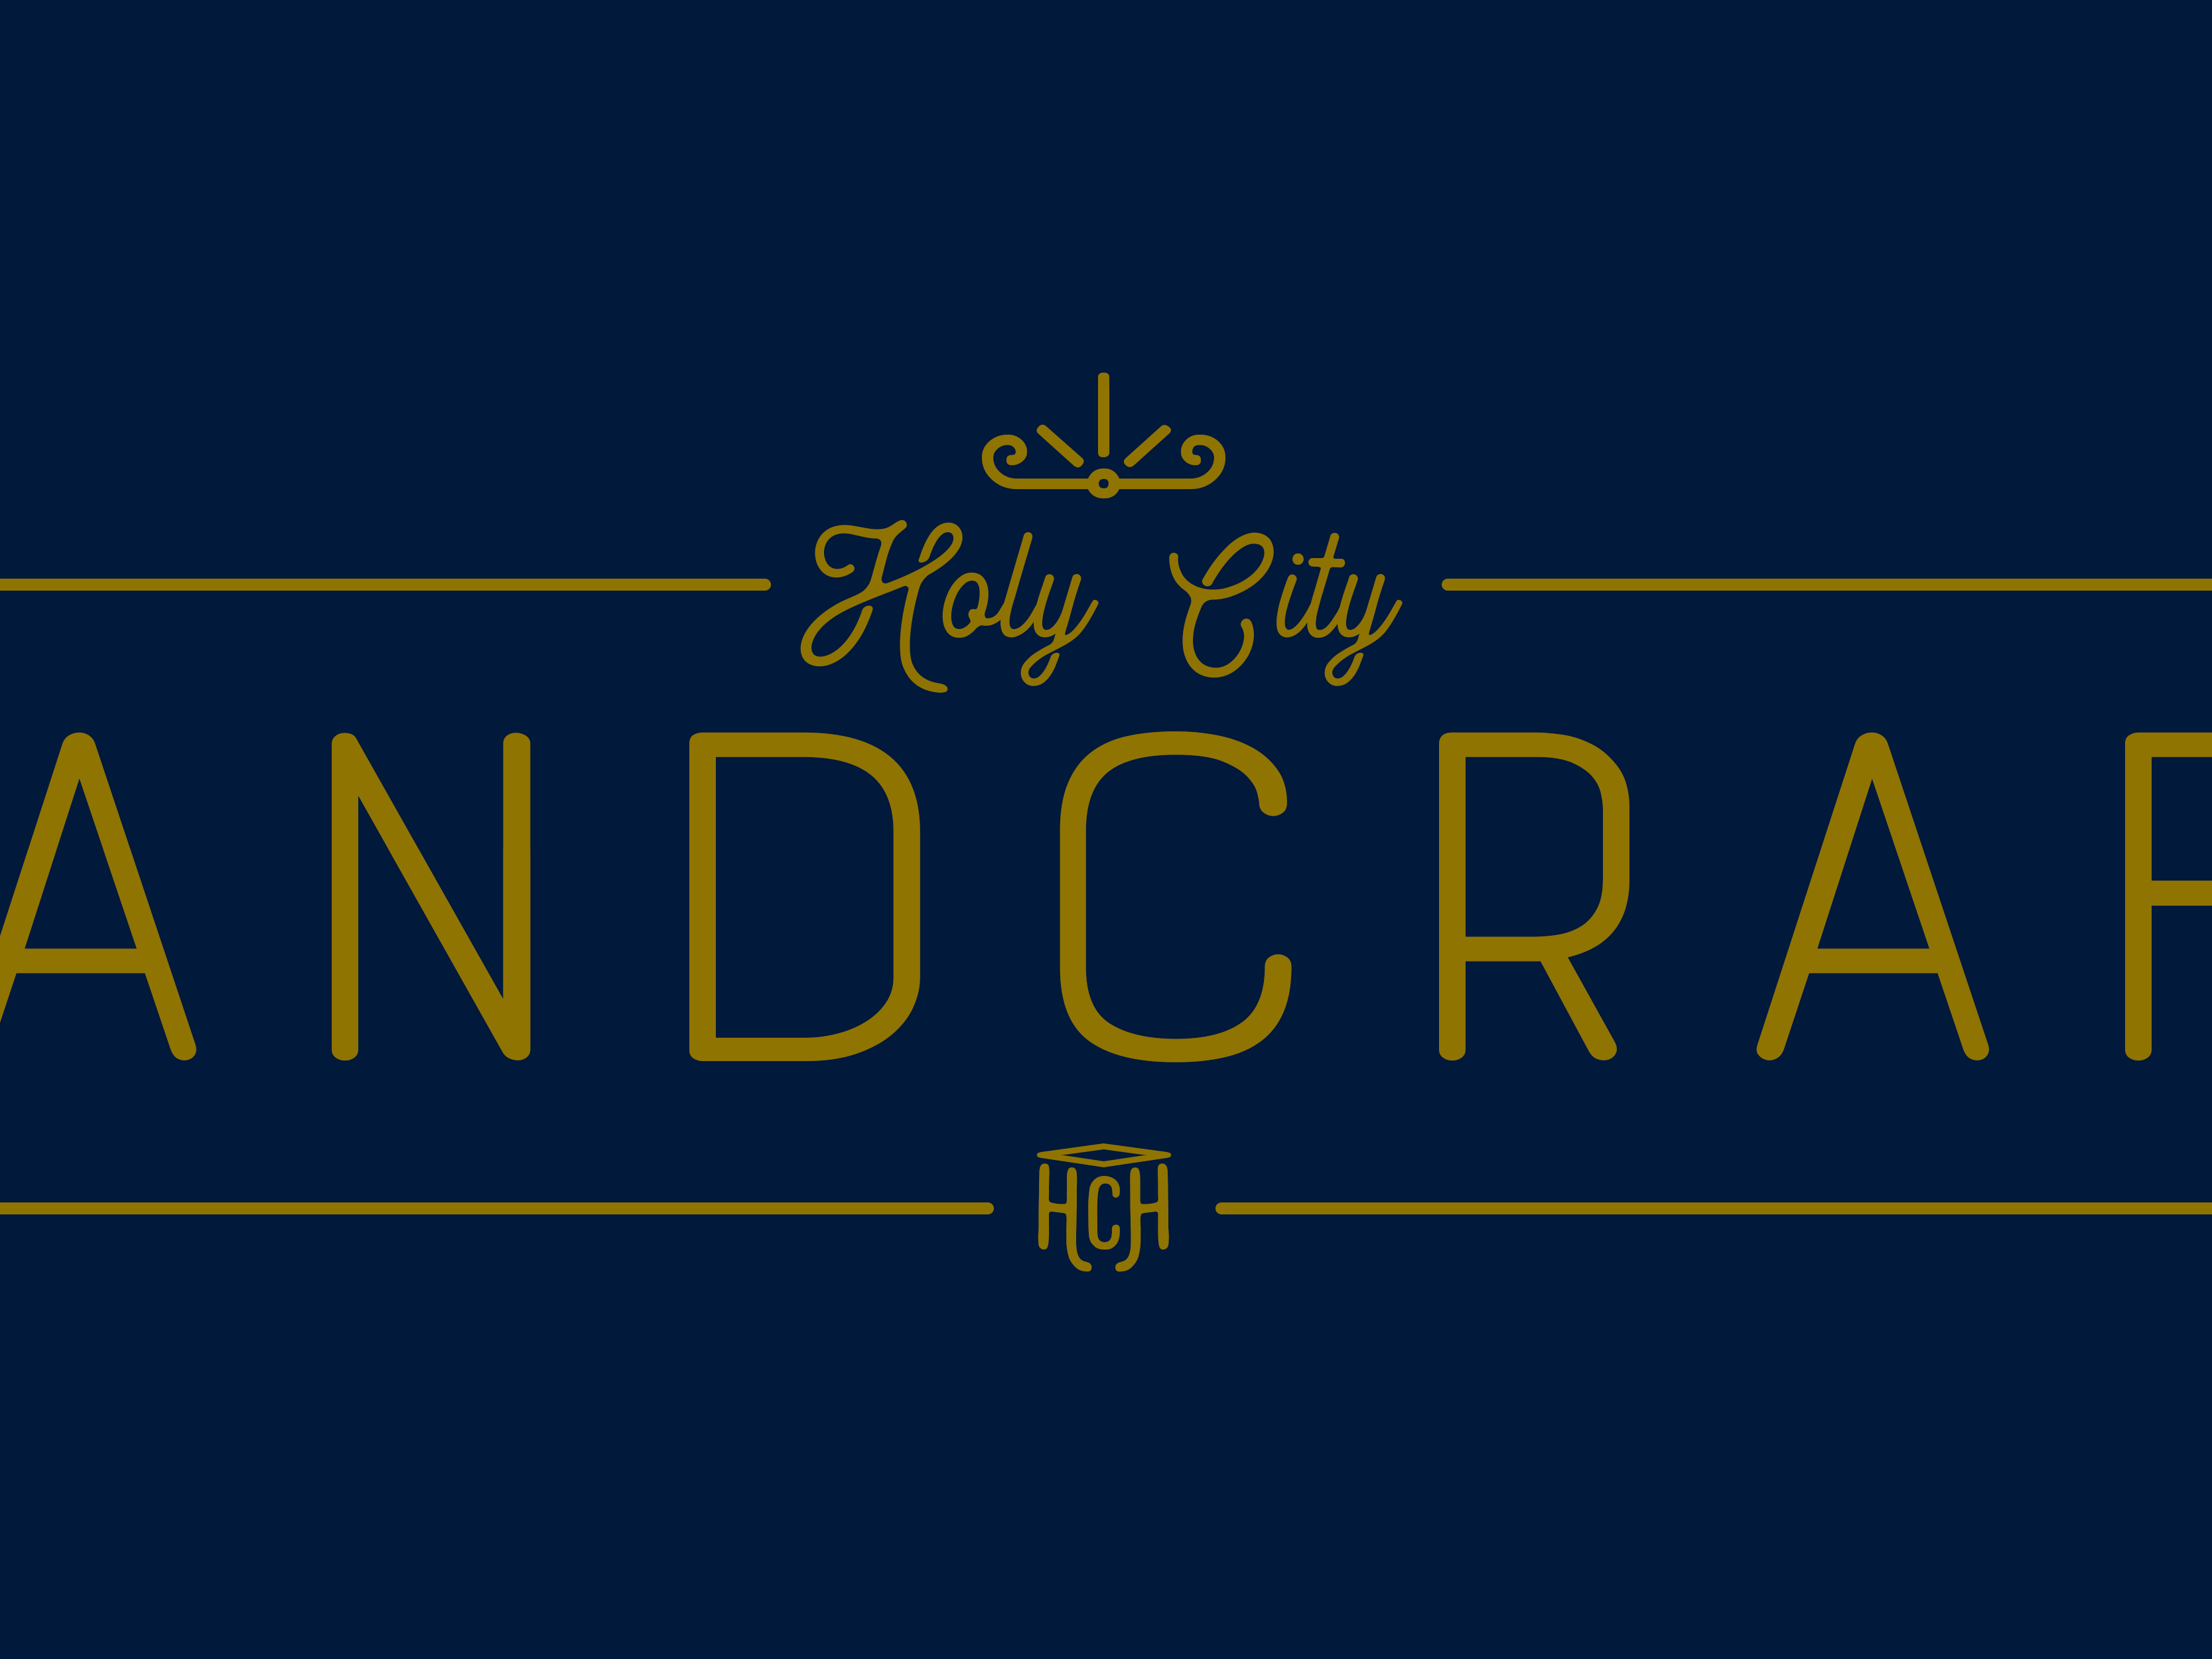 Holy City Handcraft